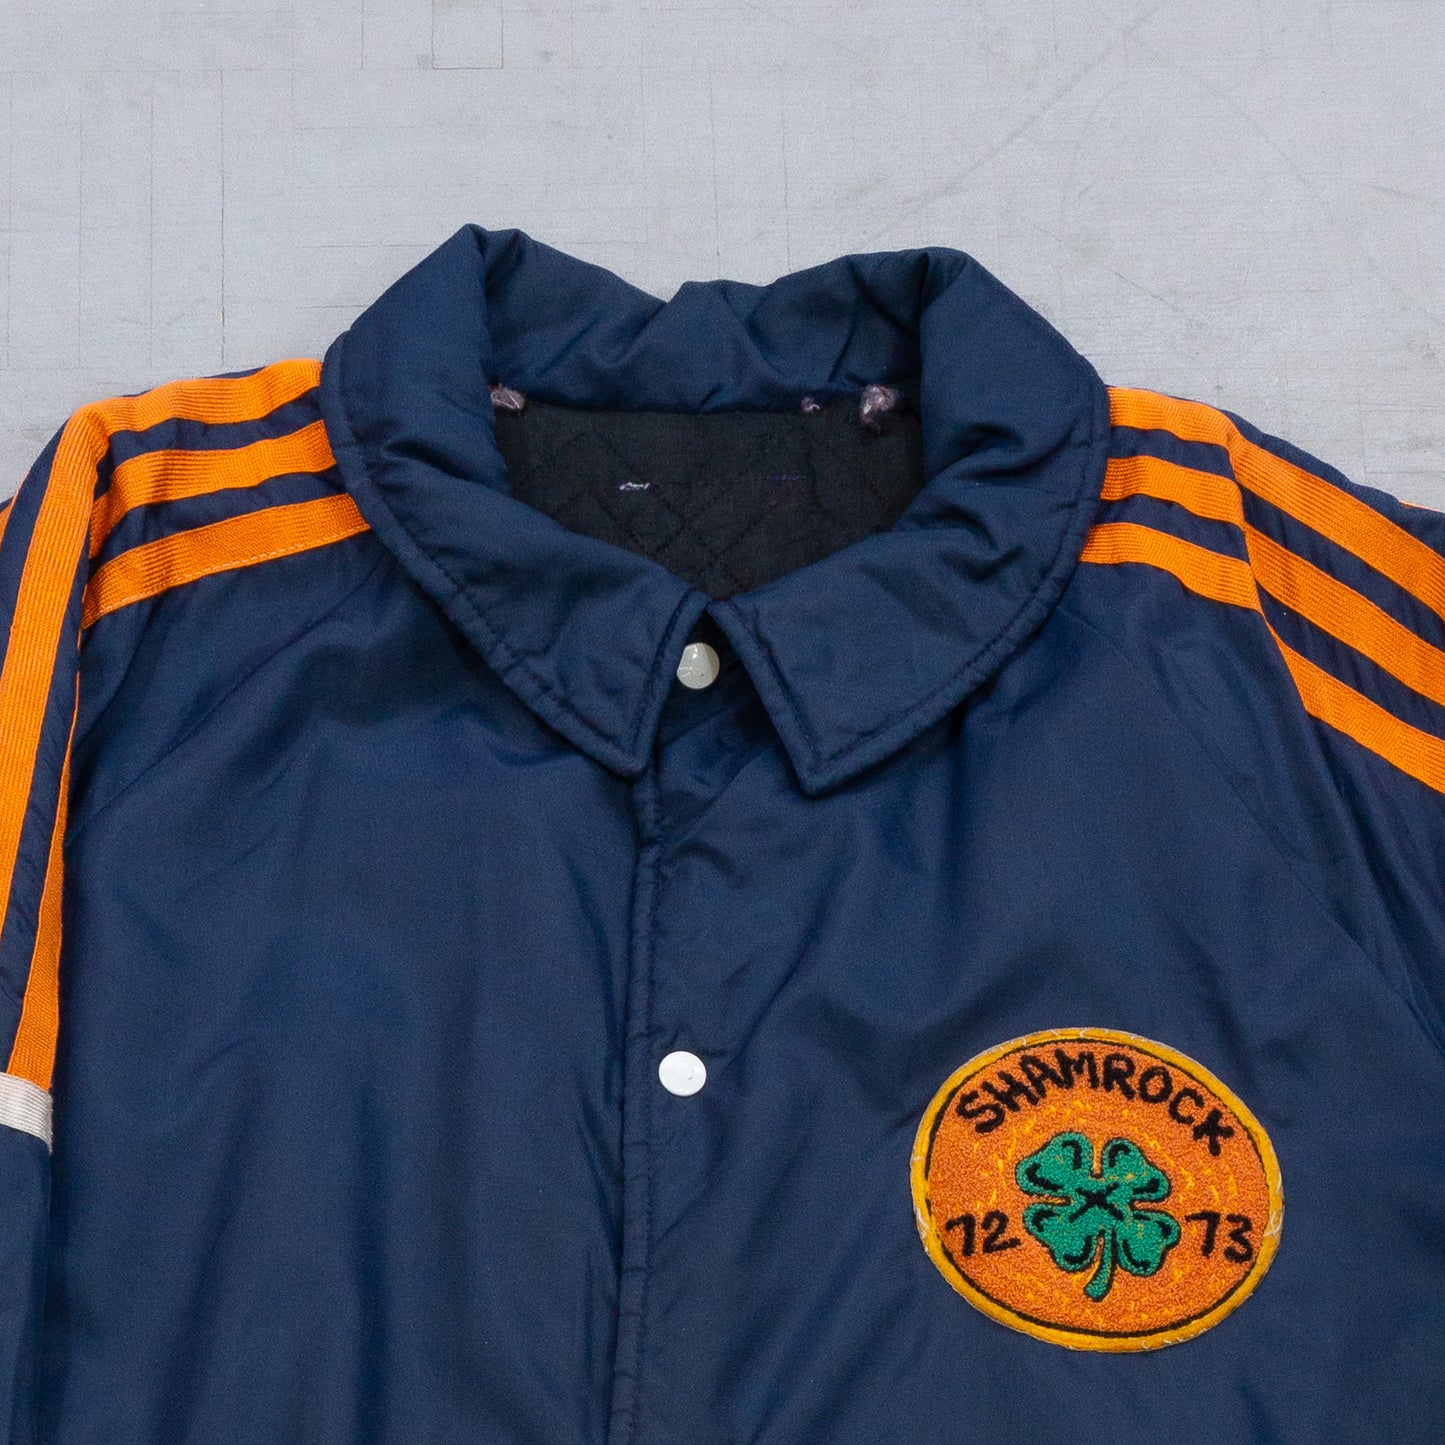 70s 'Shamrock' Winter Jacket (XL)